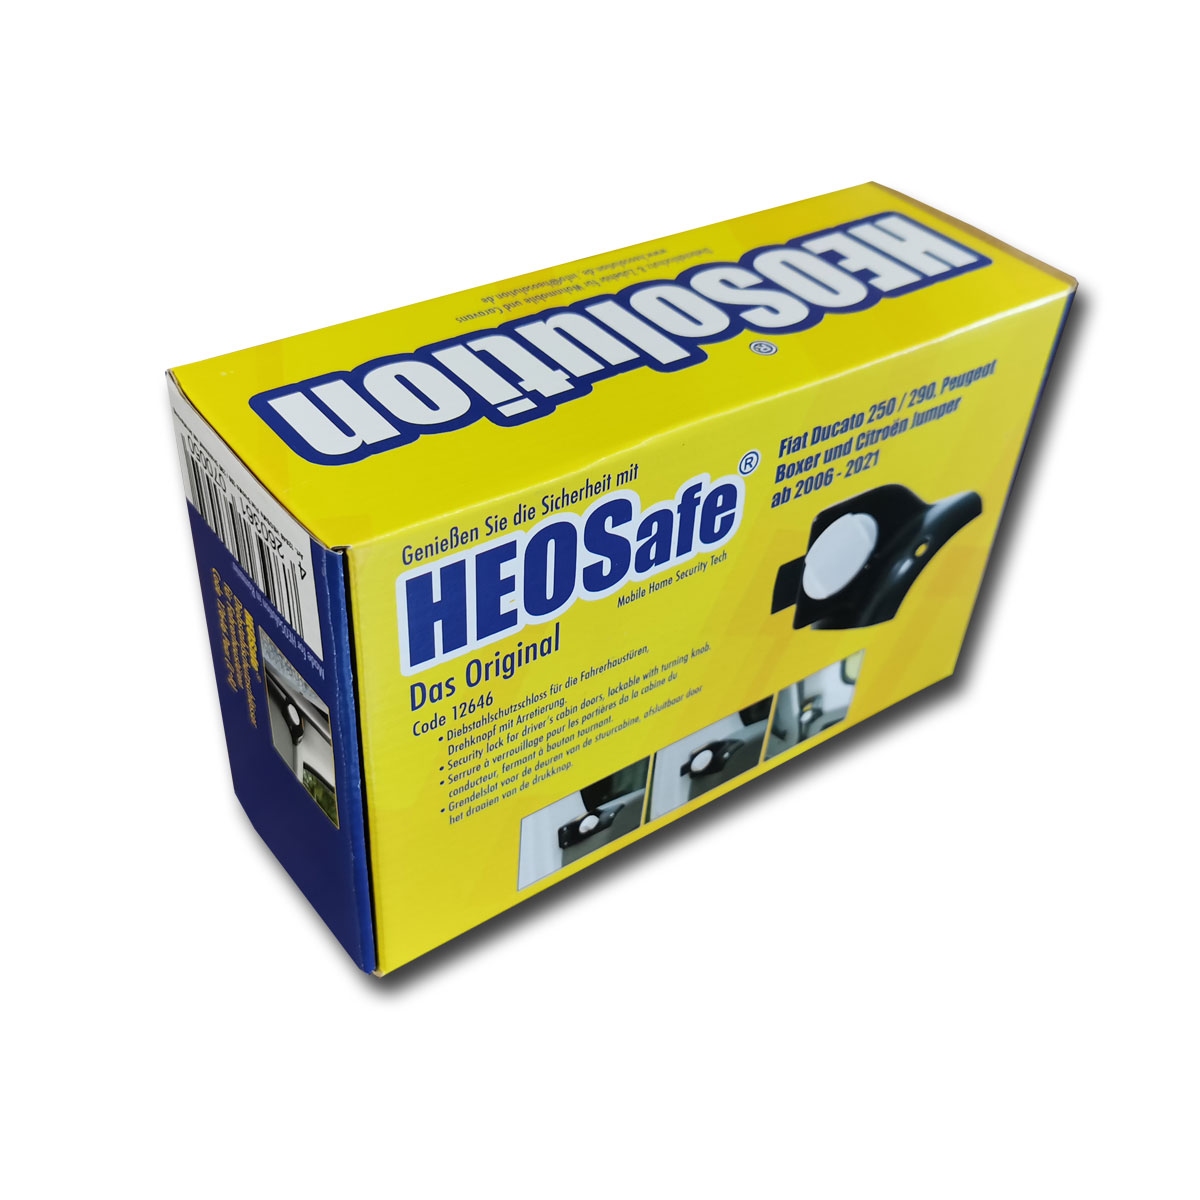 HeoSolution HEOSafe Fiat Ducato 250, Lock 290, 12656